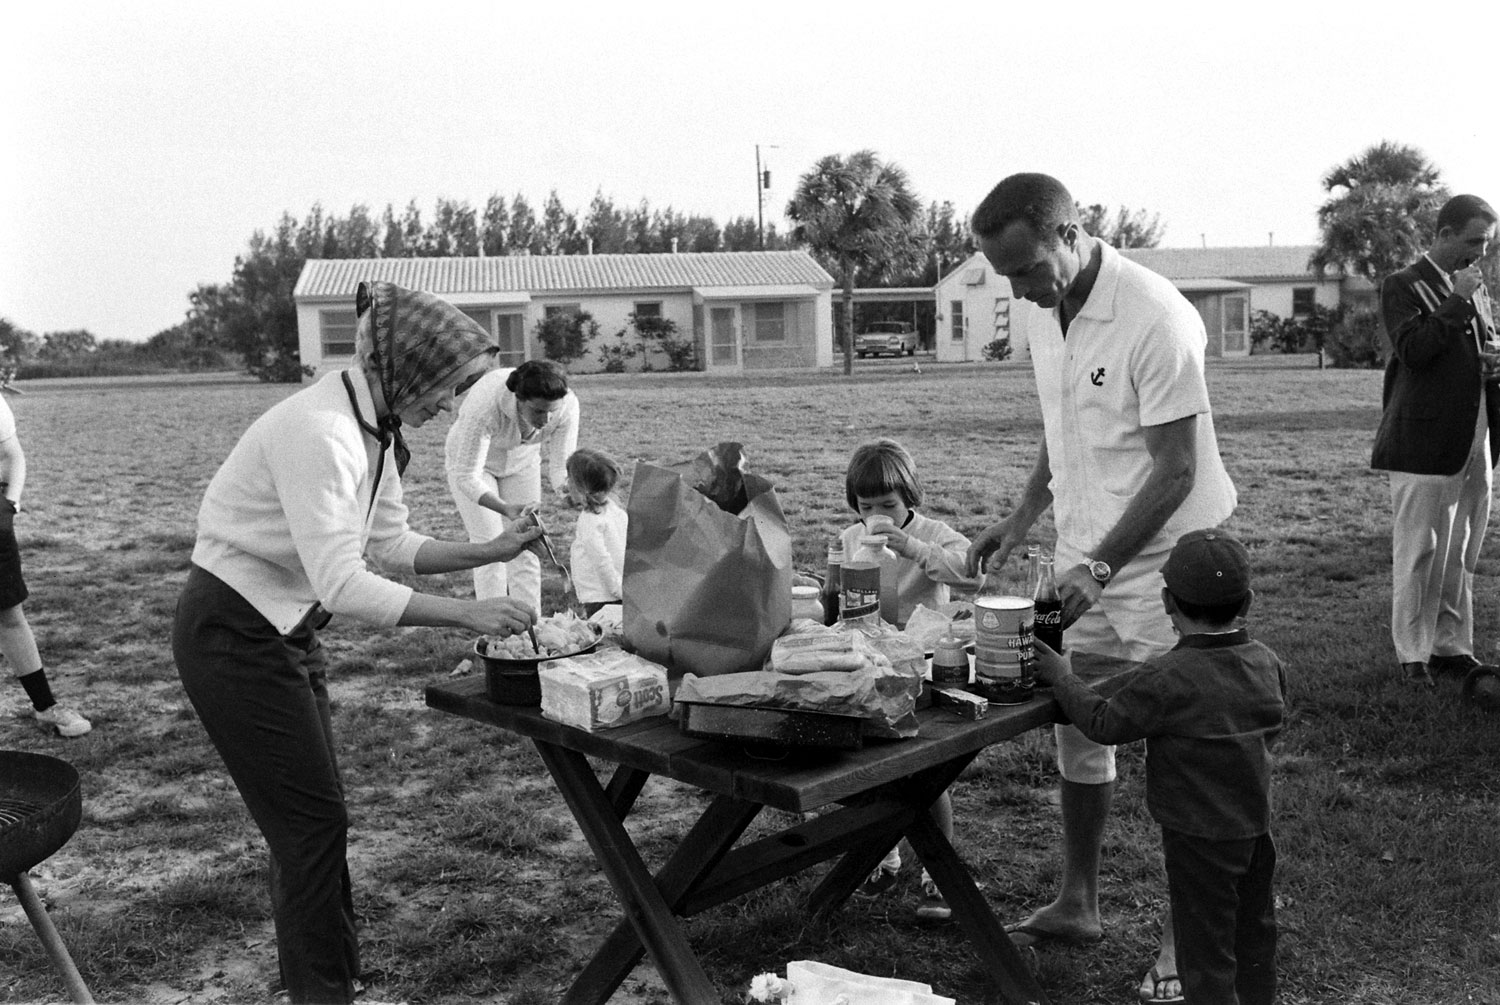 Astronaut Scott Carpenter and family picnicking, 1962.